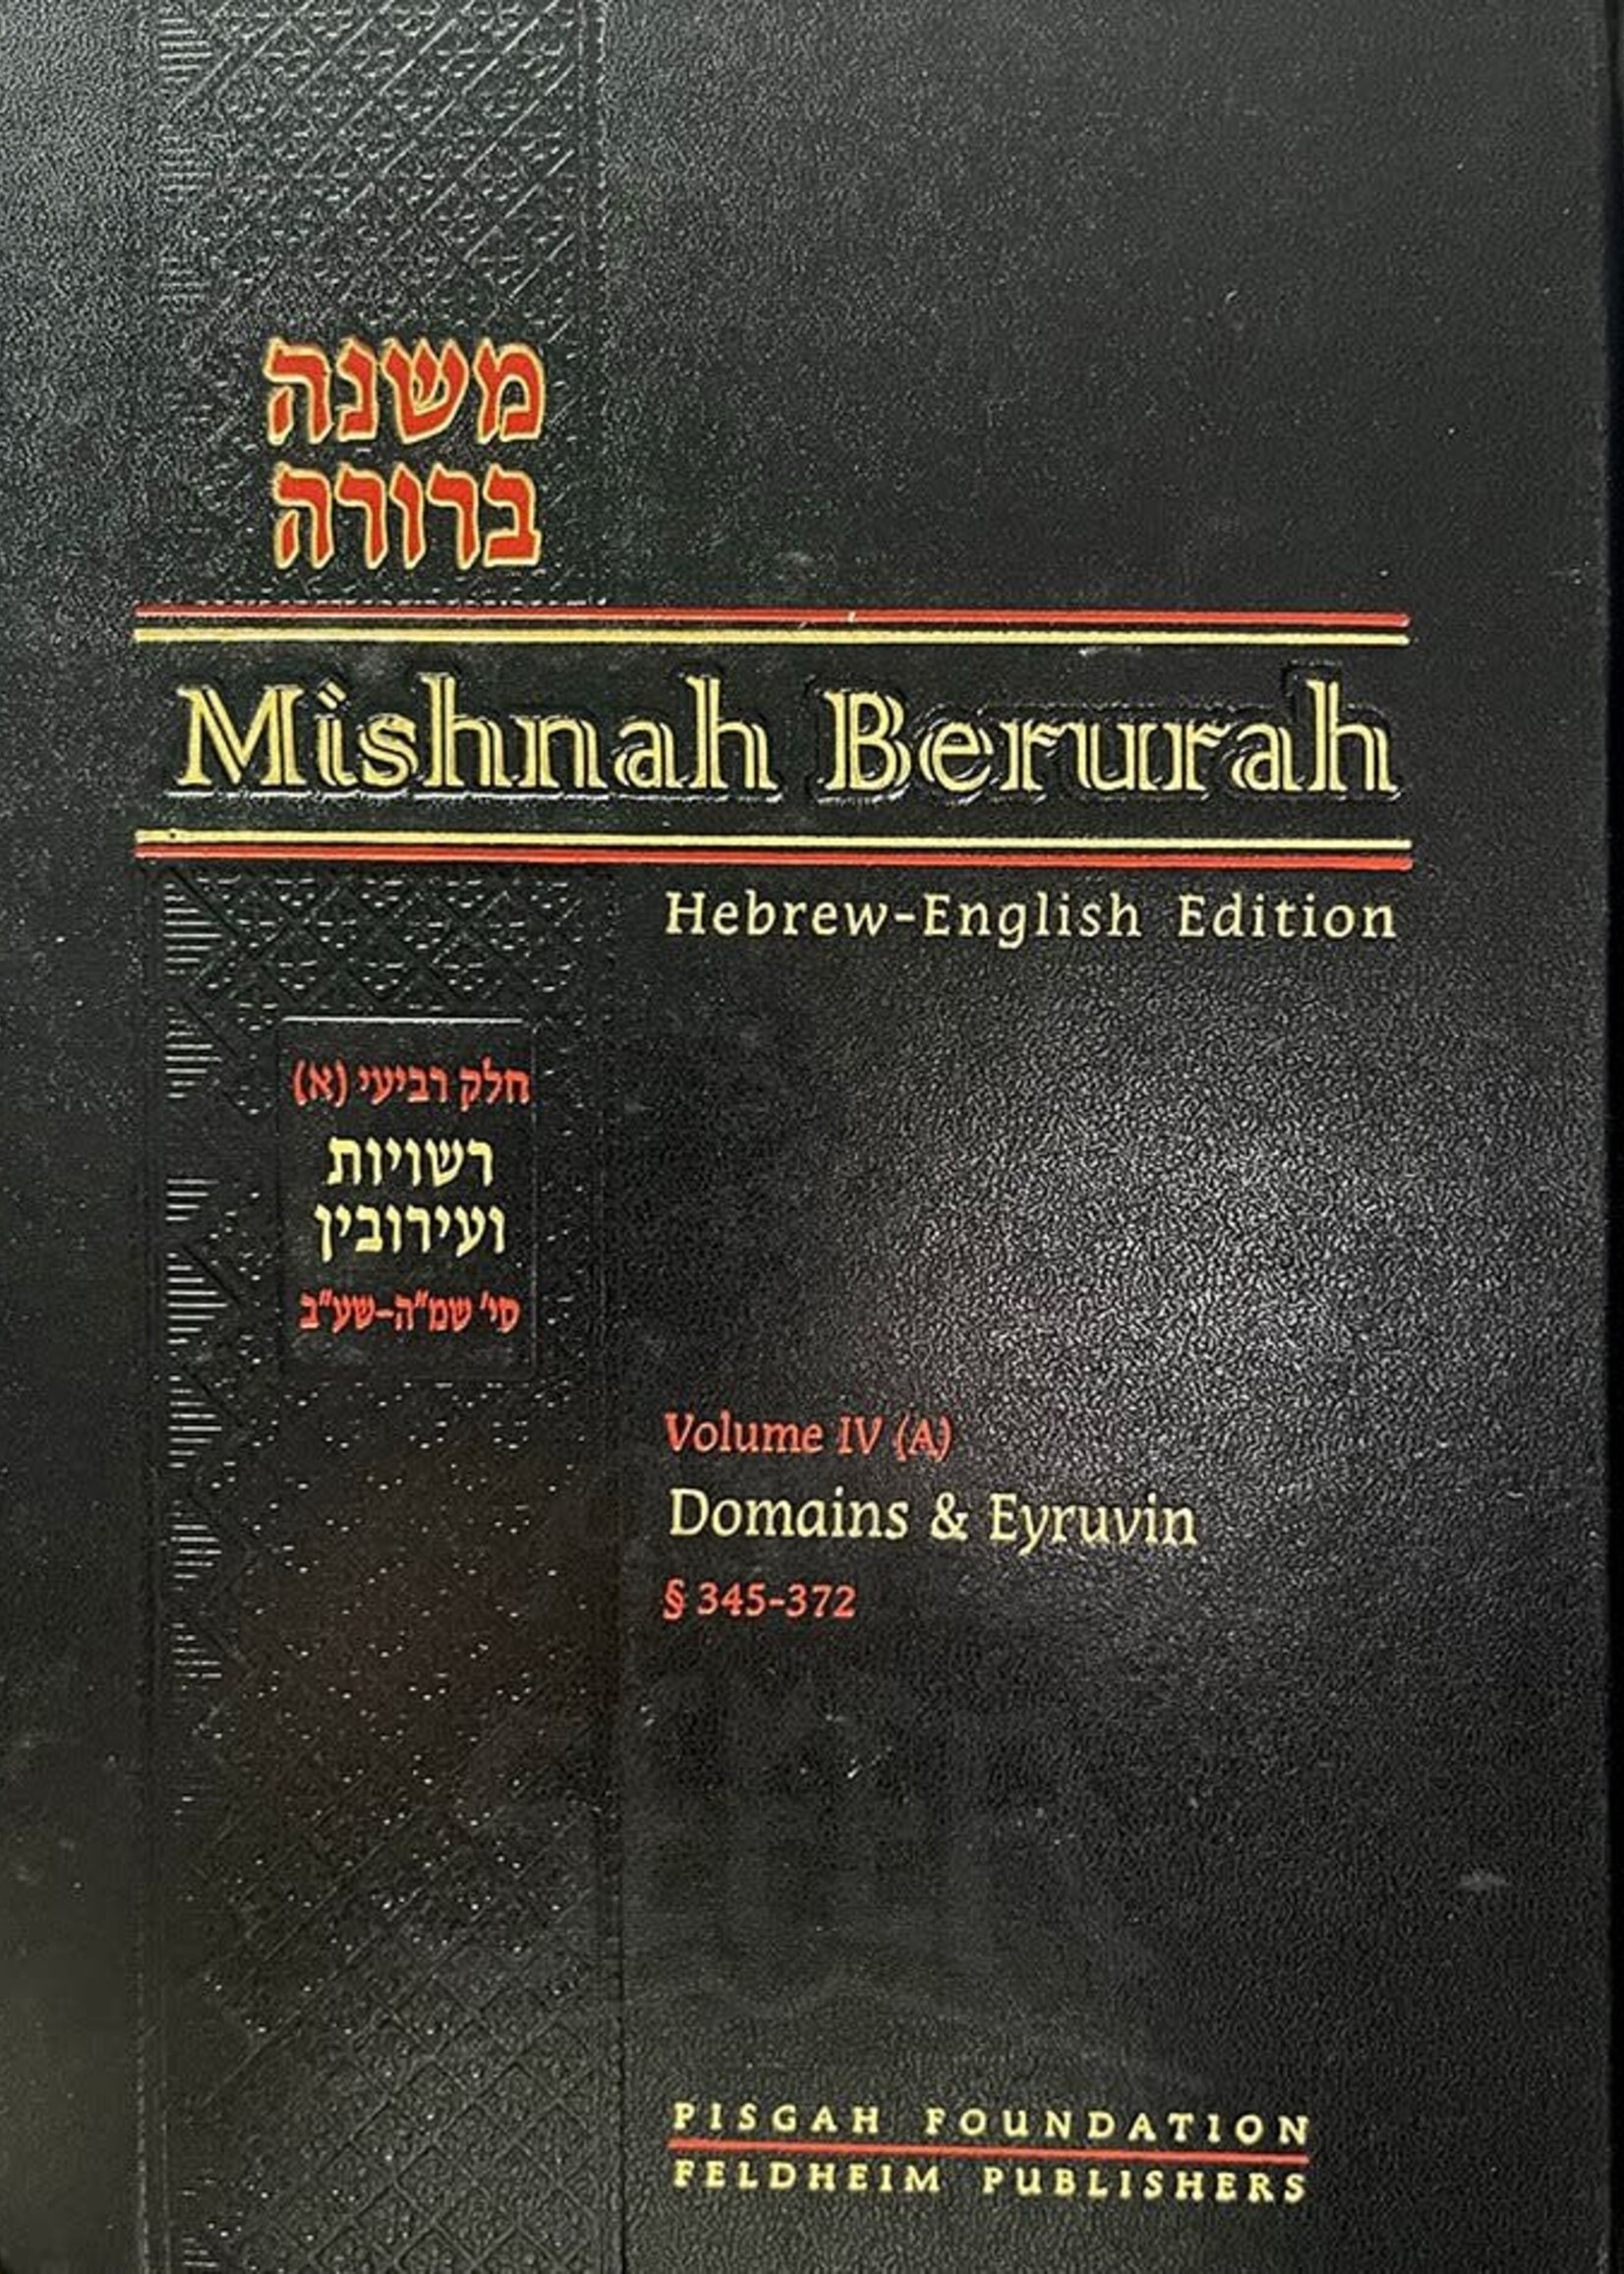 Mishnah Berurah - English/Hebrew #12 (vol. #4A - Large Size)